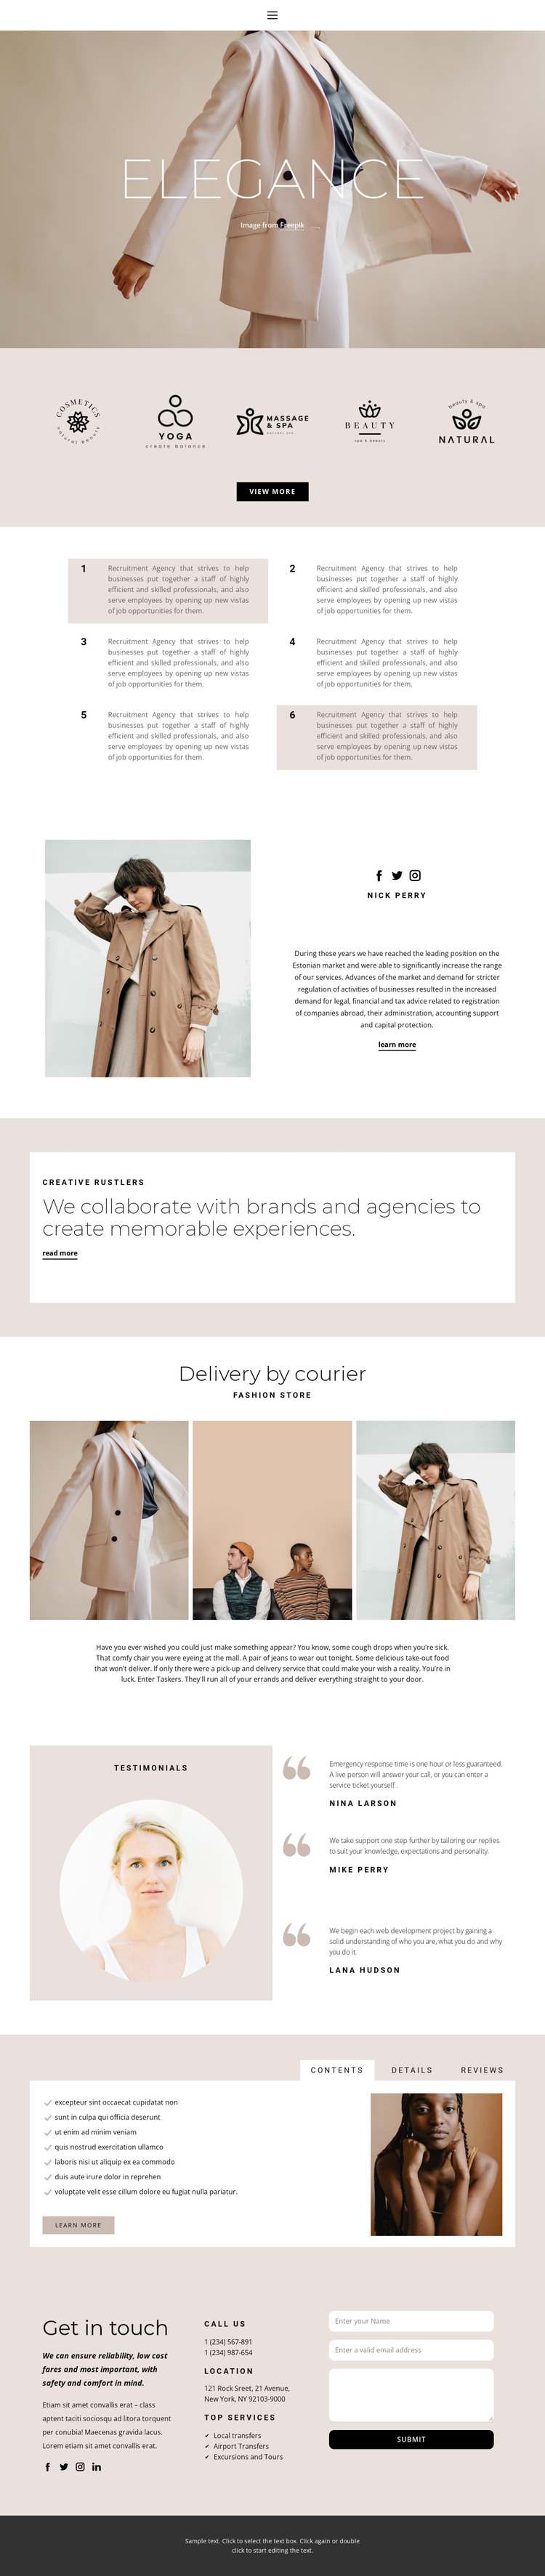 Elegance in fashion HTML Template